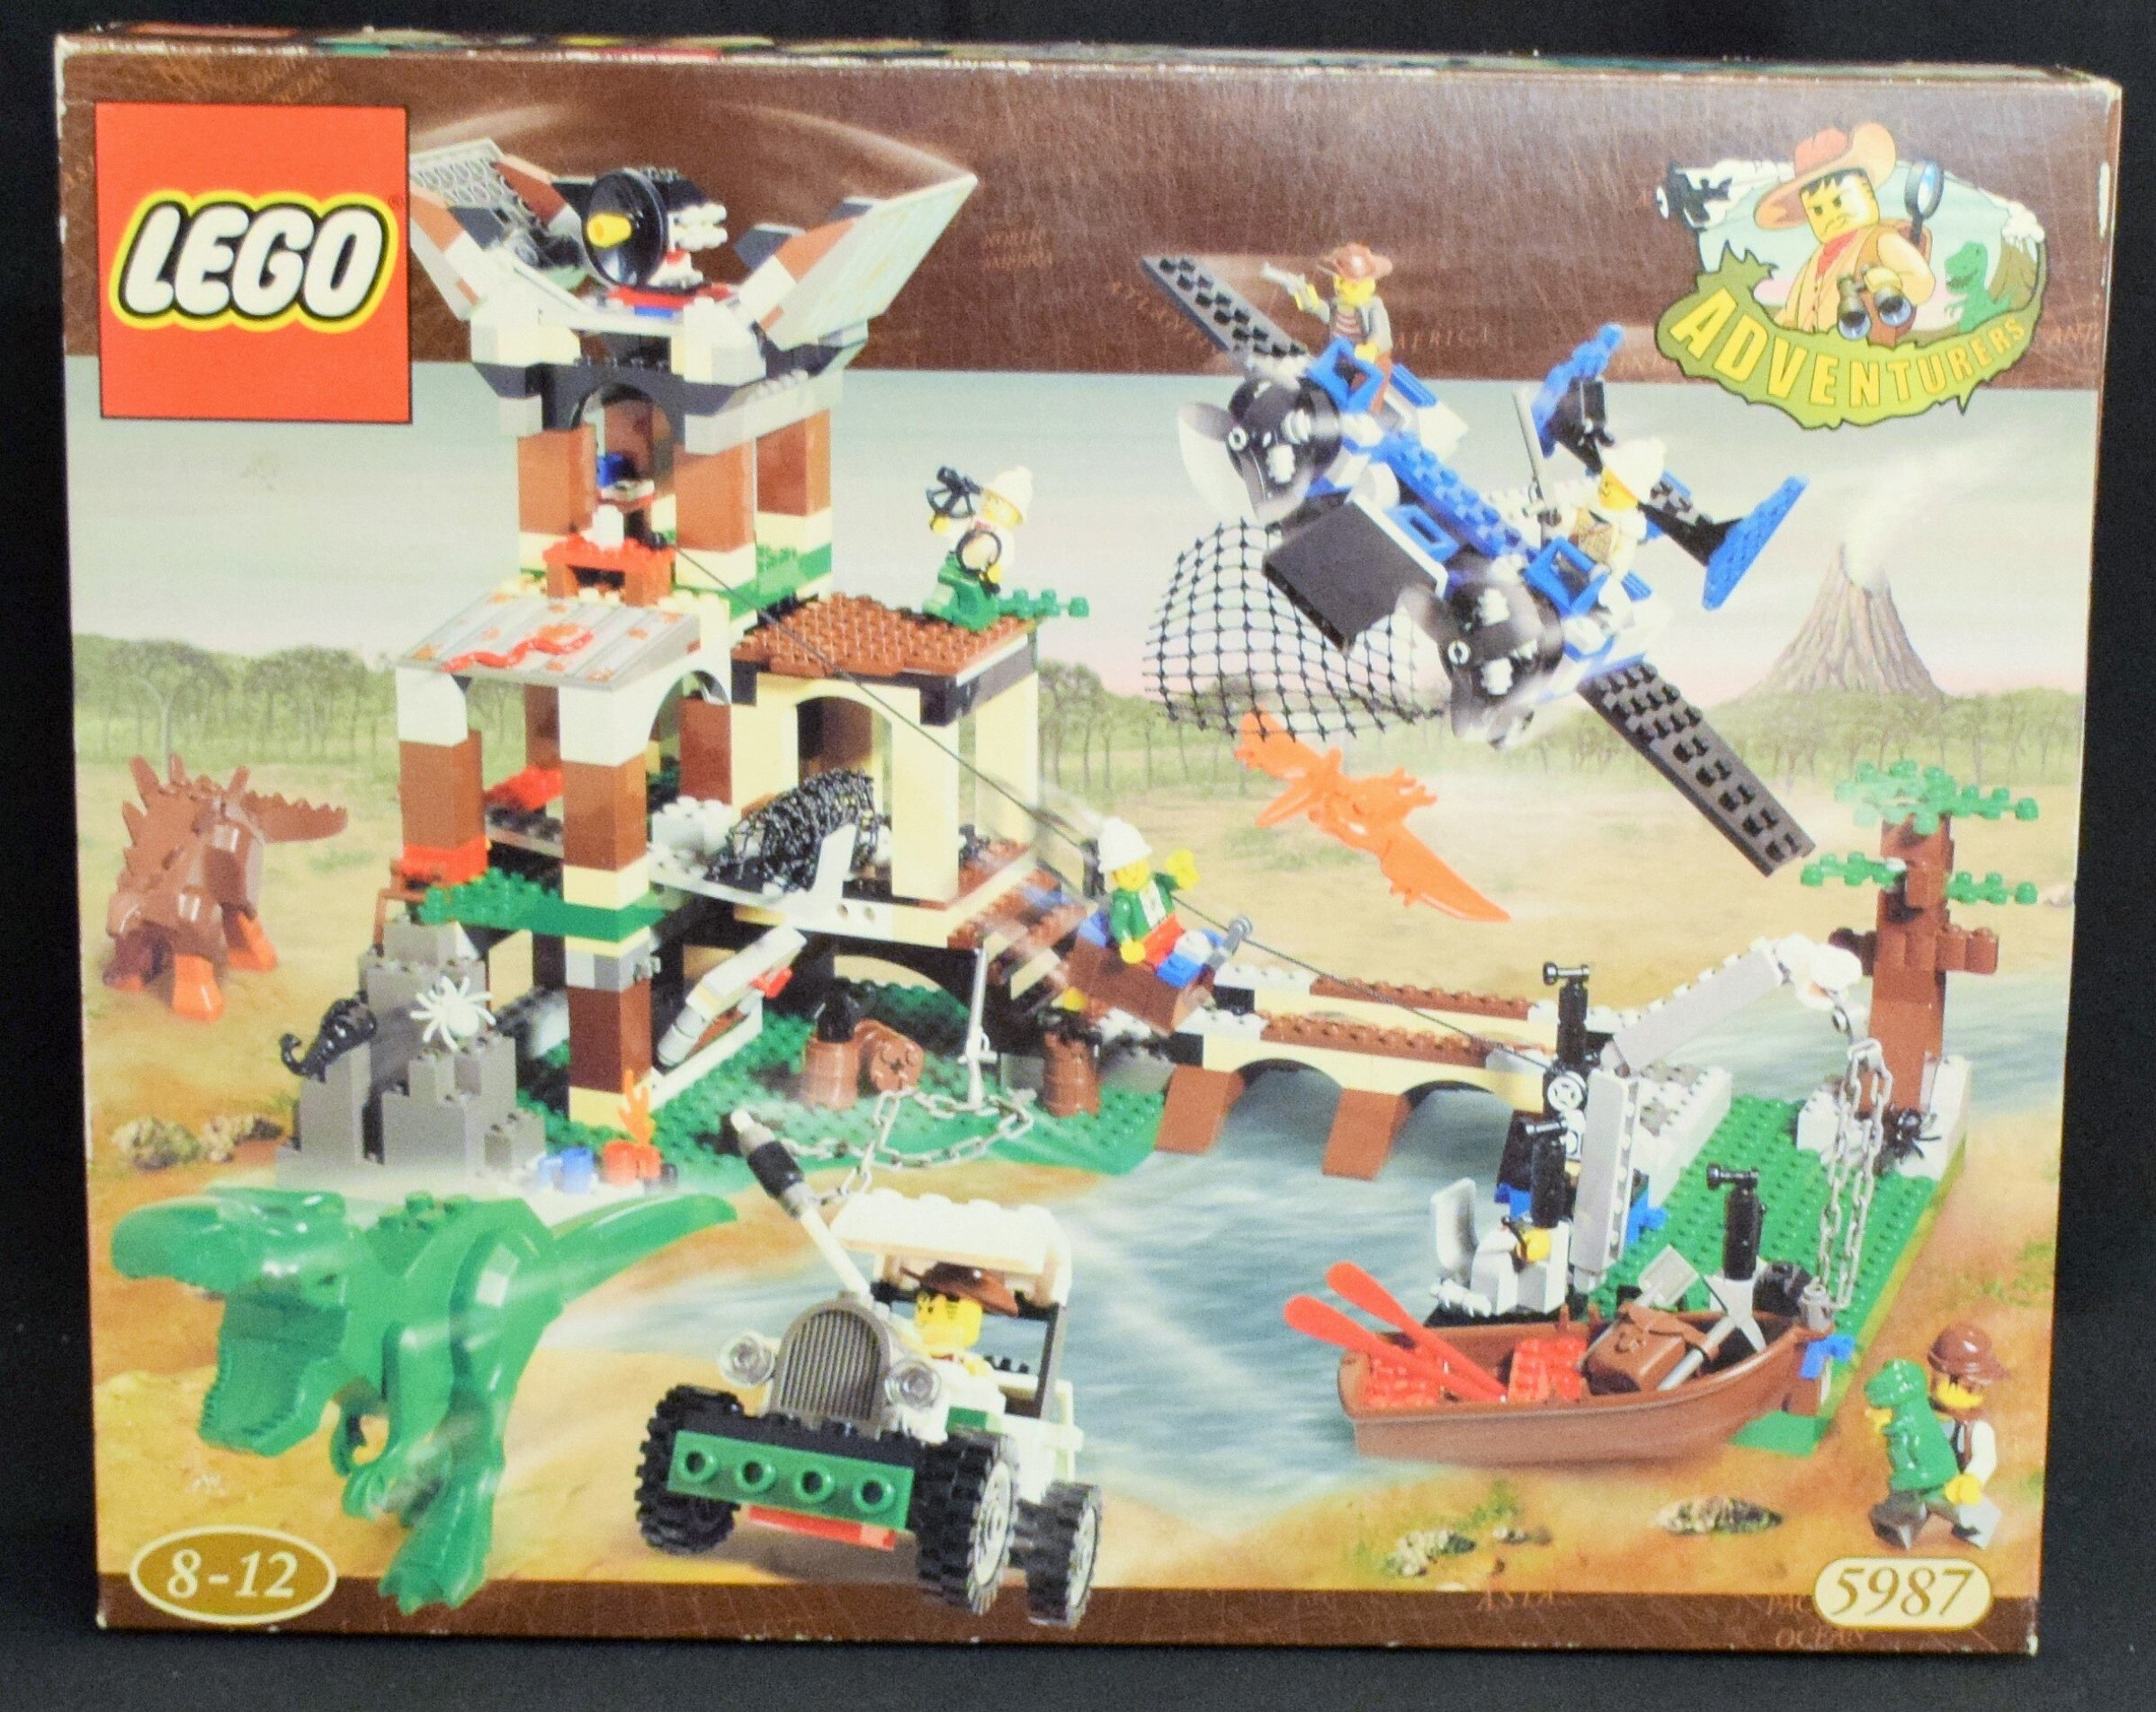 LEGO 世界の冒険 ダイノアドベンチャーパーク 5987 | まんだらけ Mandarake